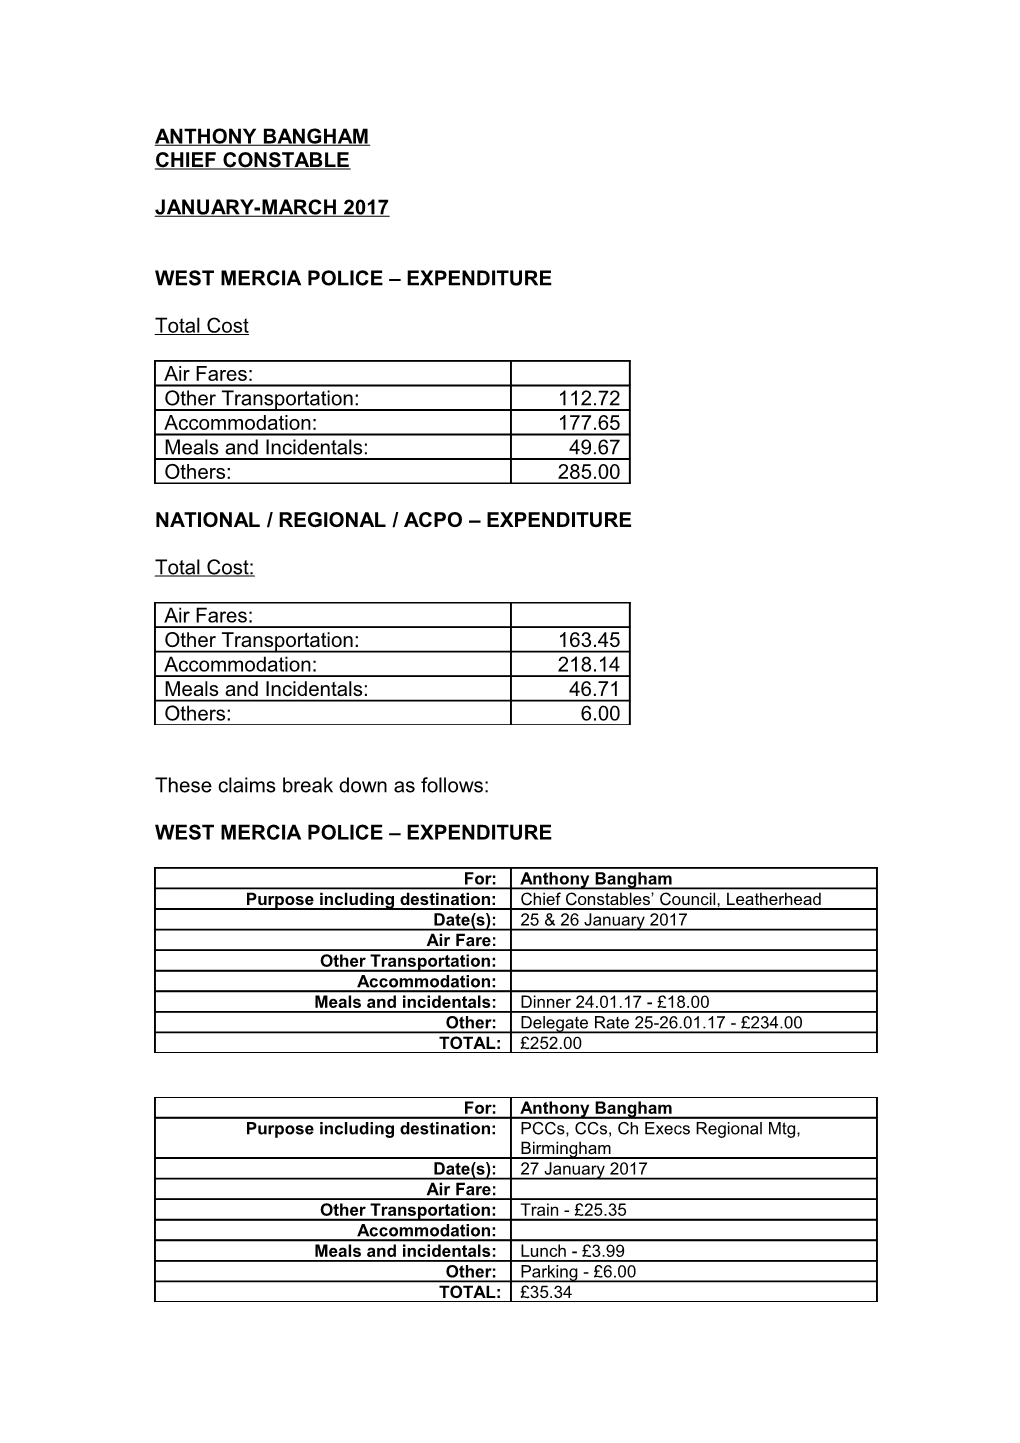 West Mercia Police Expenditure